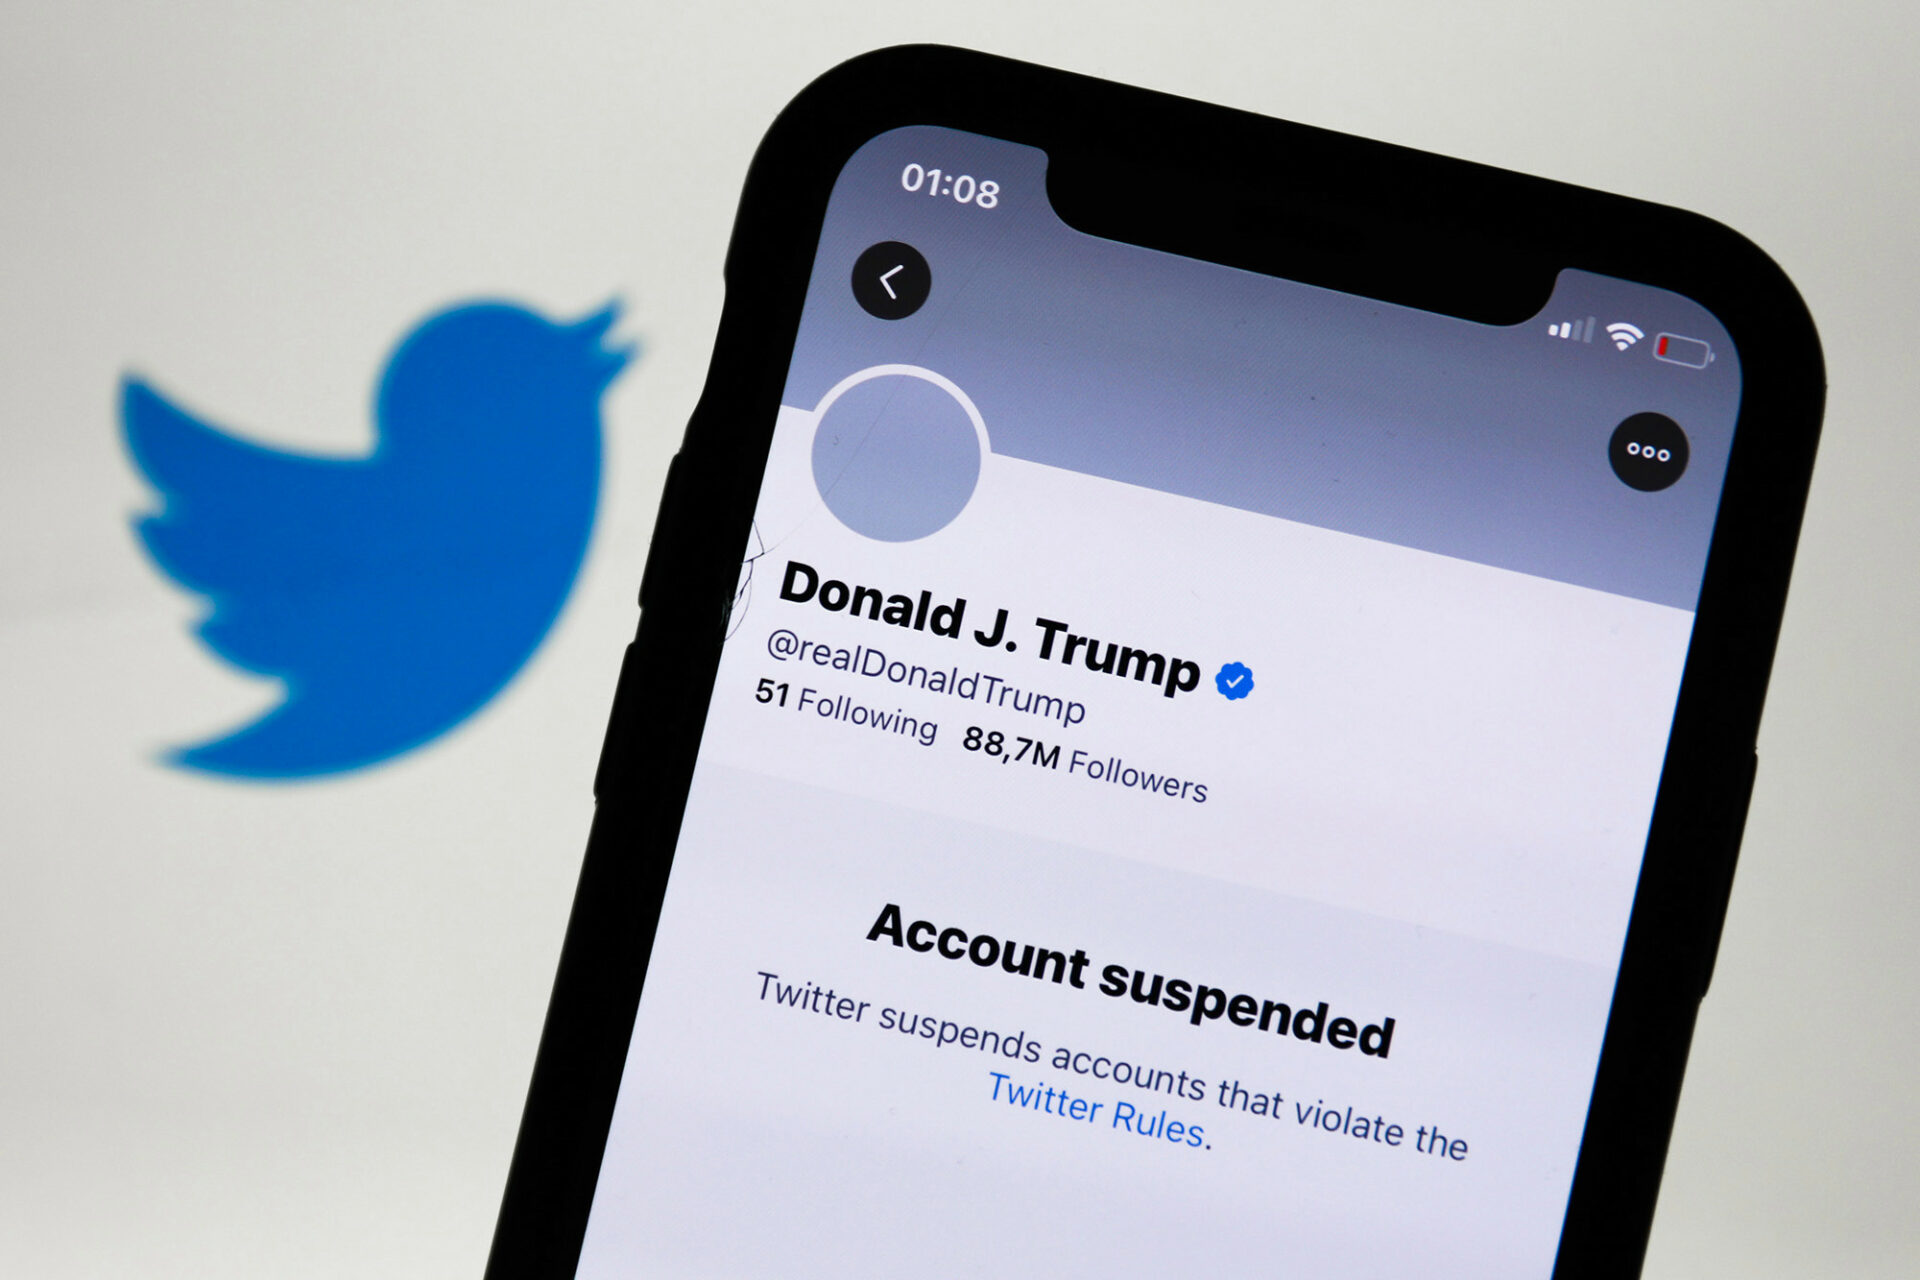 Donald Trump’s Twitter account has also been suspended.